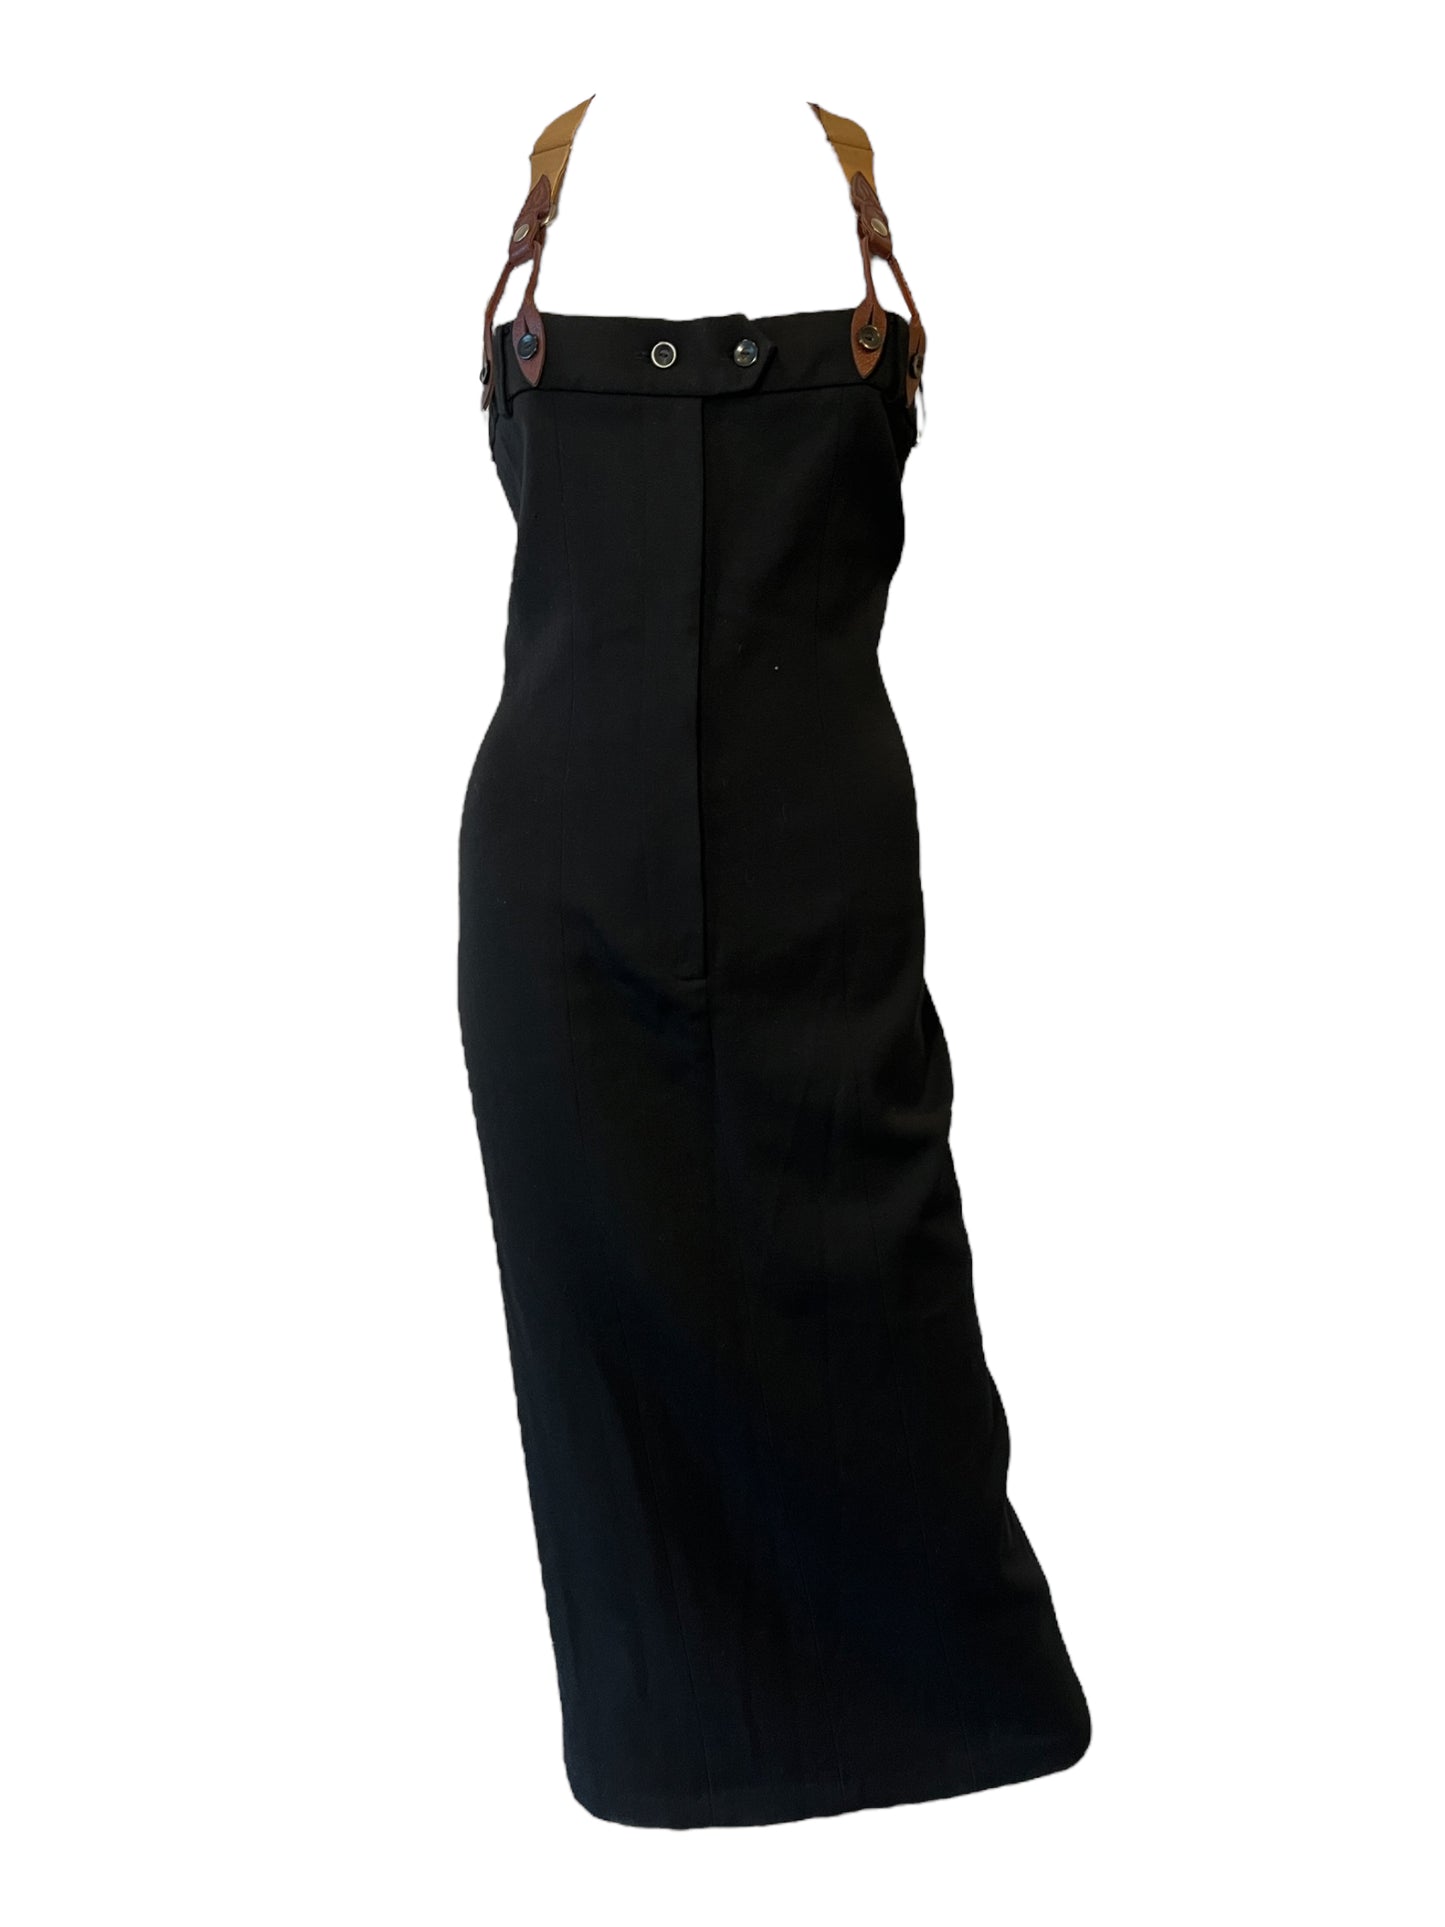 Jean Paul Gaultier 1993 Suspender Dress